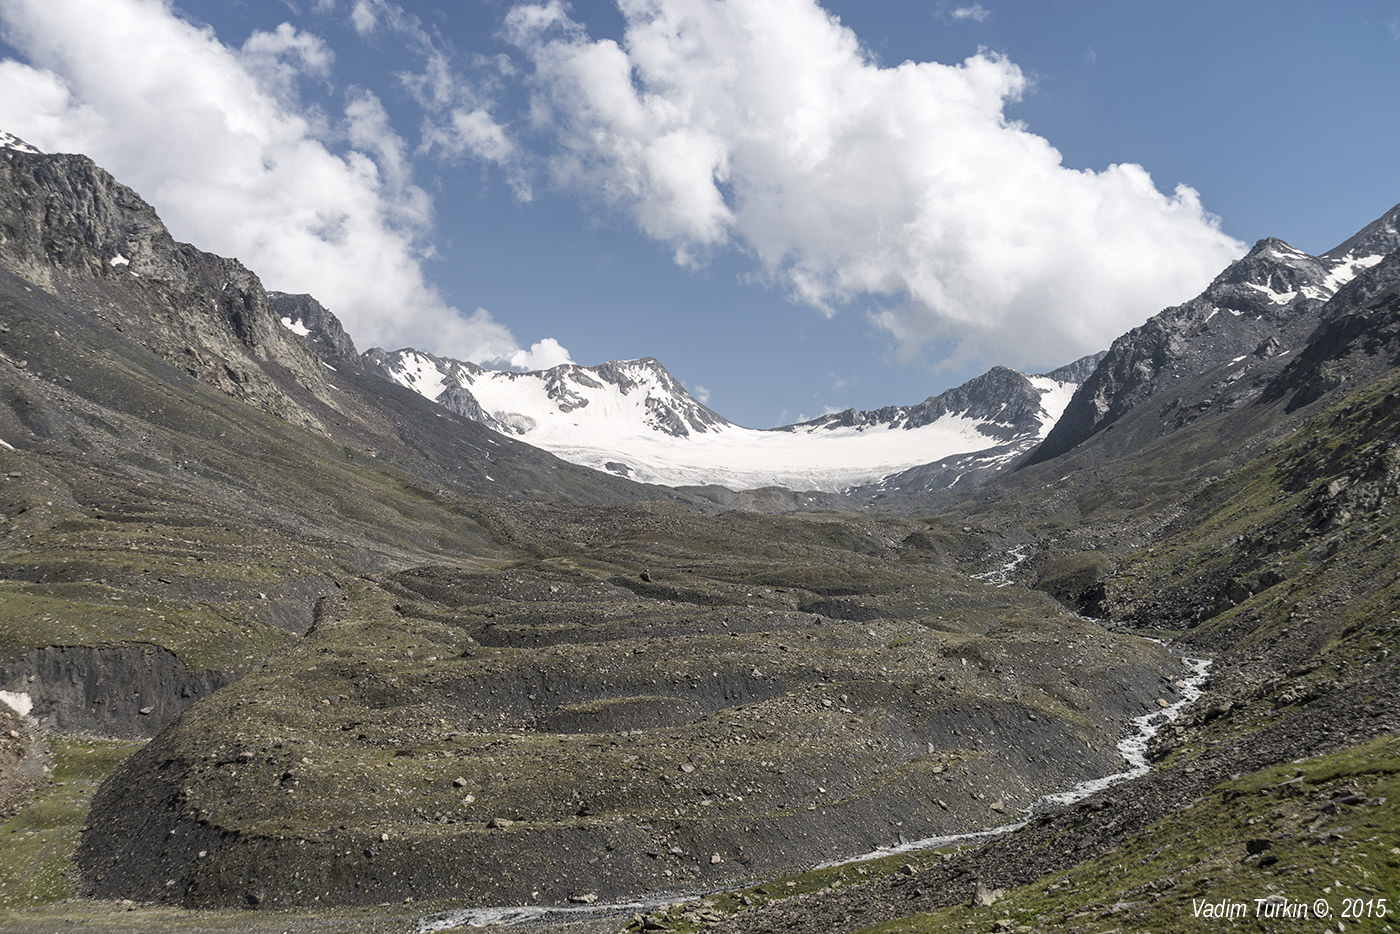 Moraine of Kibishi glacier